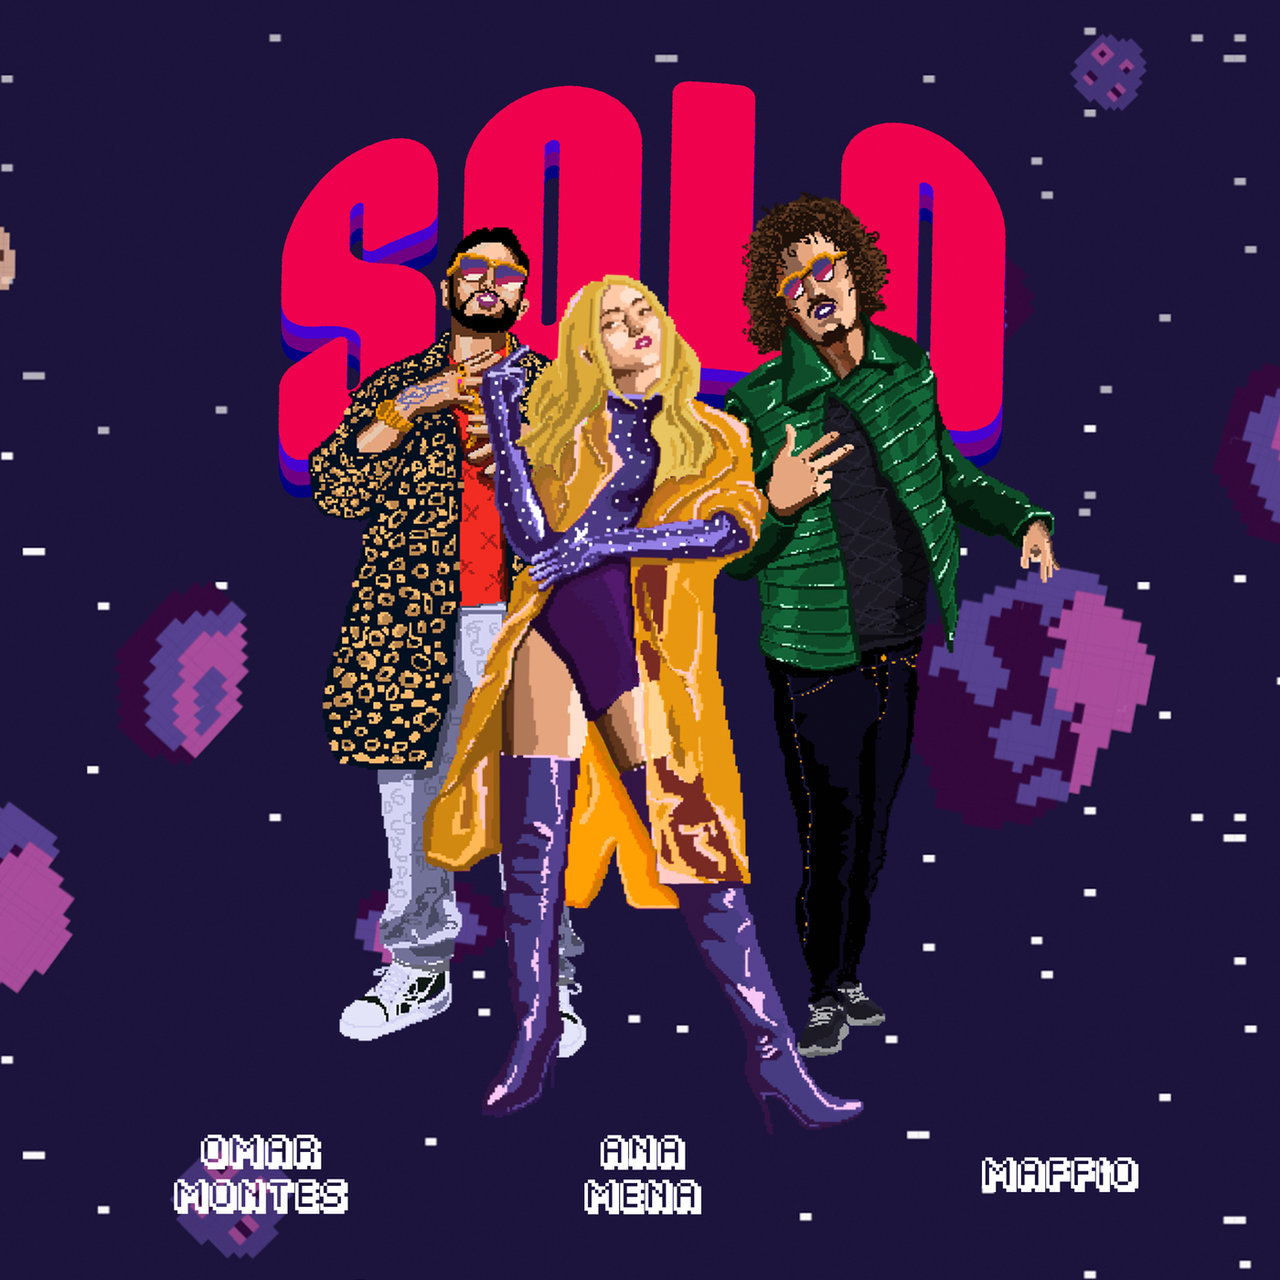 Omar Montes, Ana Mena, & Maffio Solo cover artwork